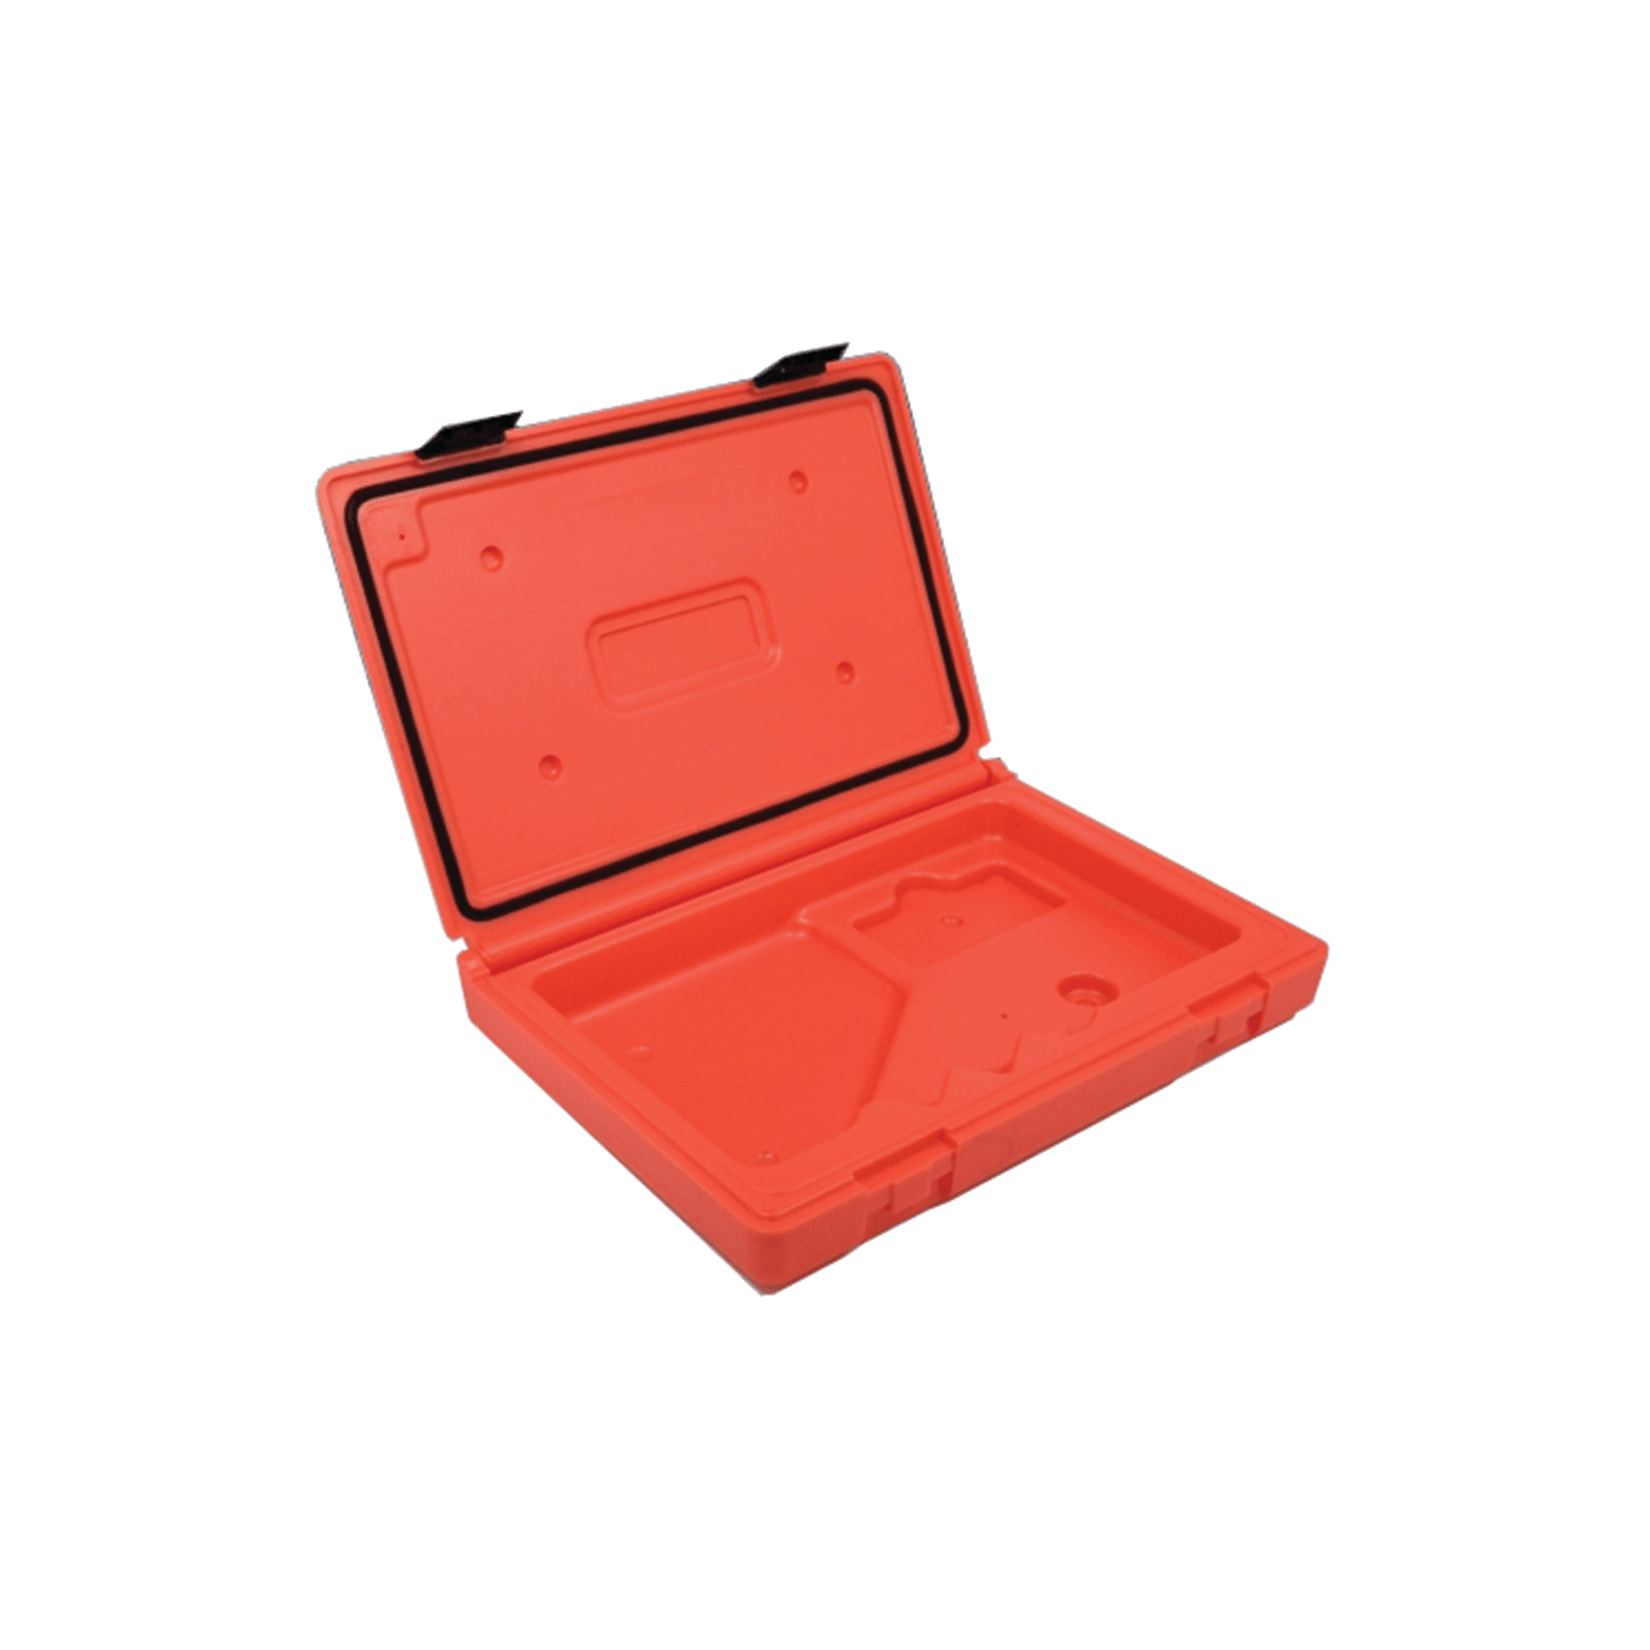 Orion Safety 514 Ammunition Box, orange